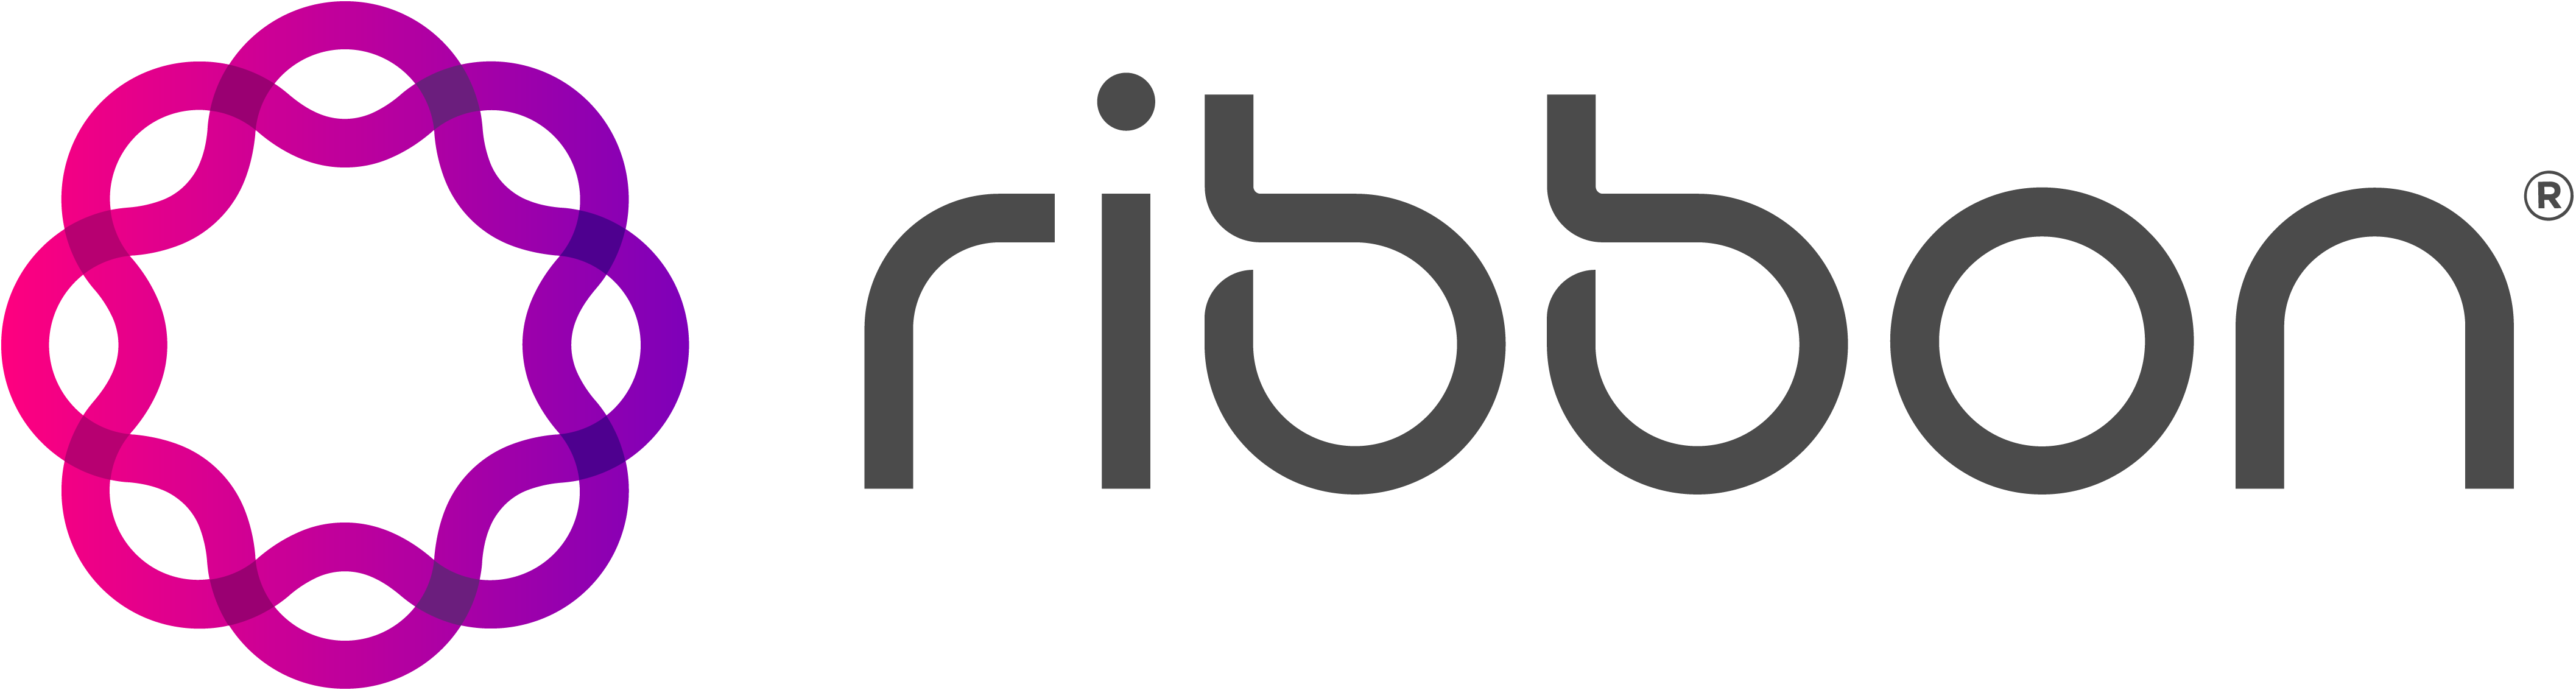 Ribbon Partner Logo